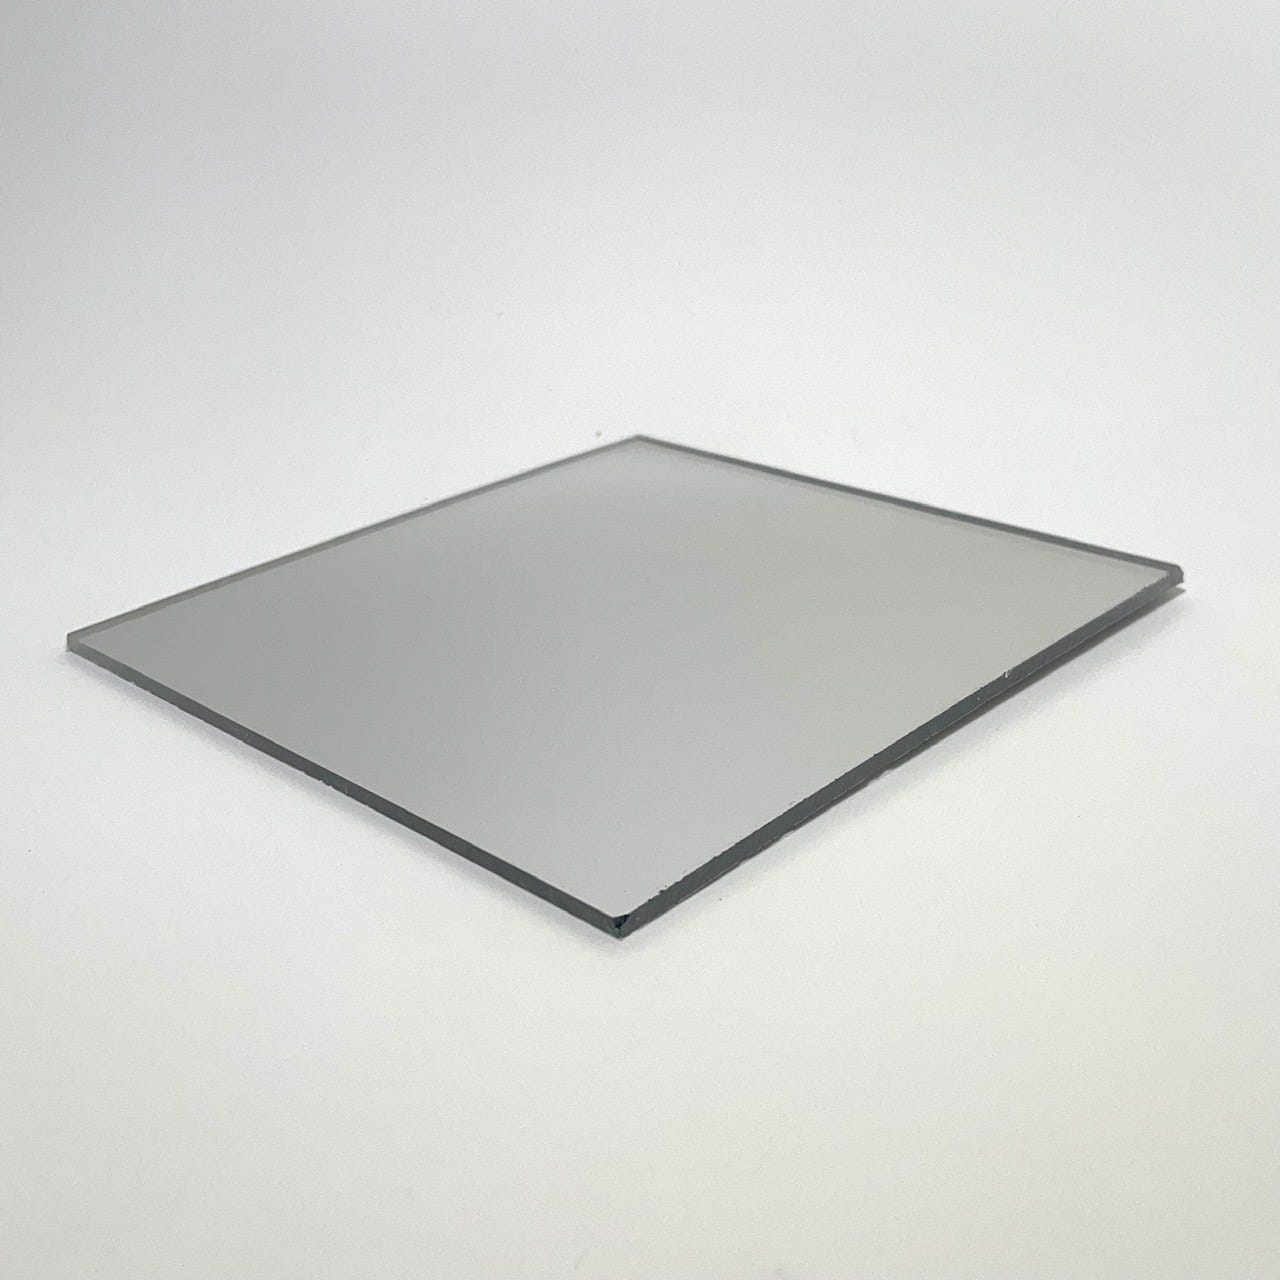 Pannello Plexiglass Estruso Specchio Argento Sp. 3 mm 70 x 100 cm